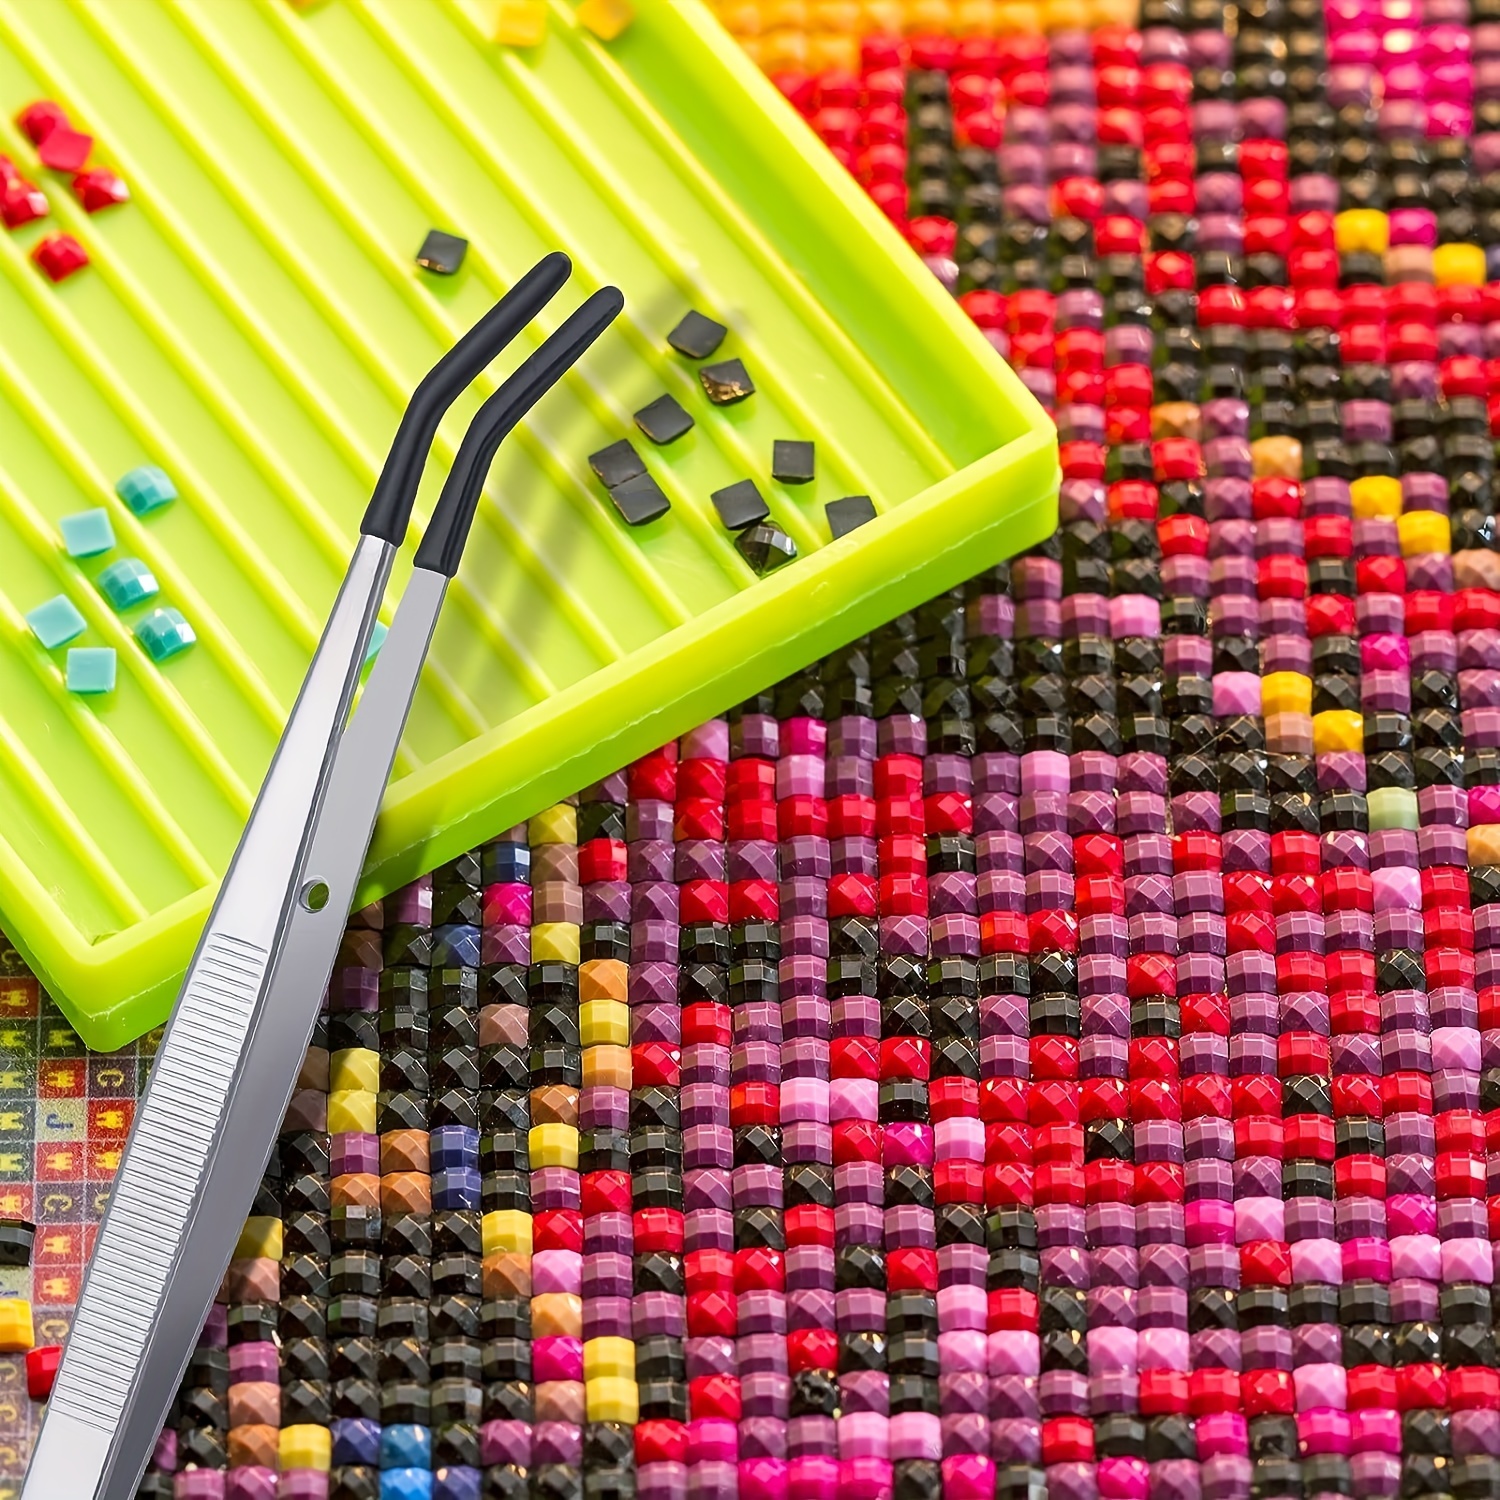 2 Pcs of Rubber Tip Tweezers Set for Craft Laboratory Industrial